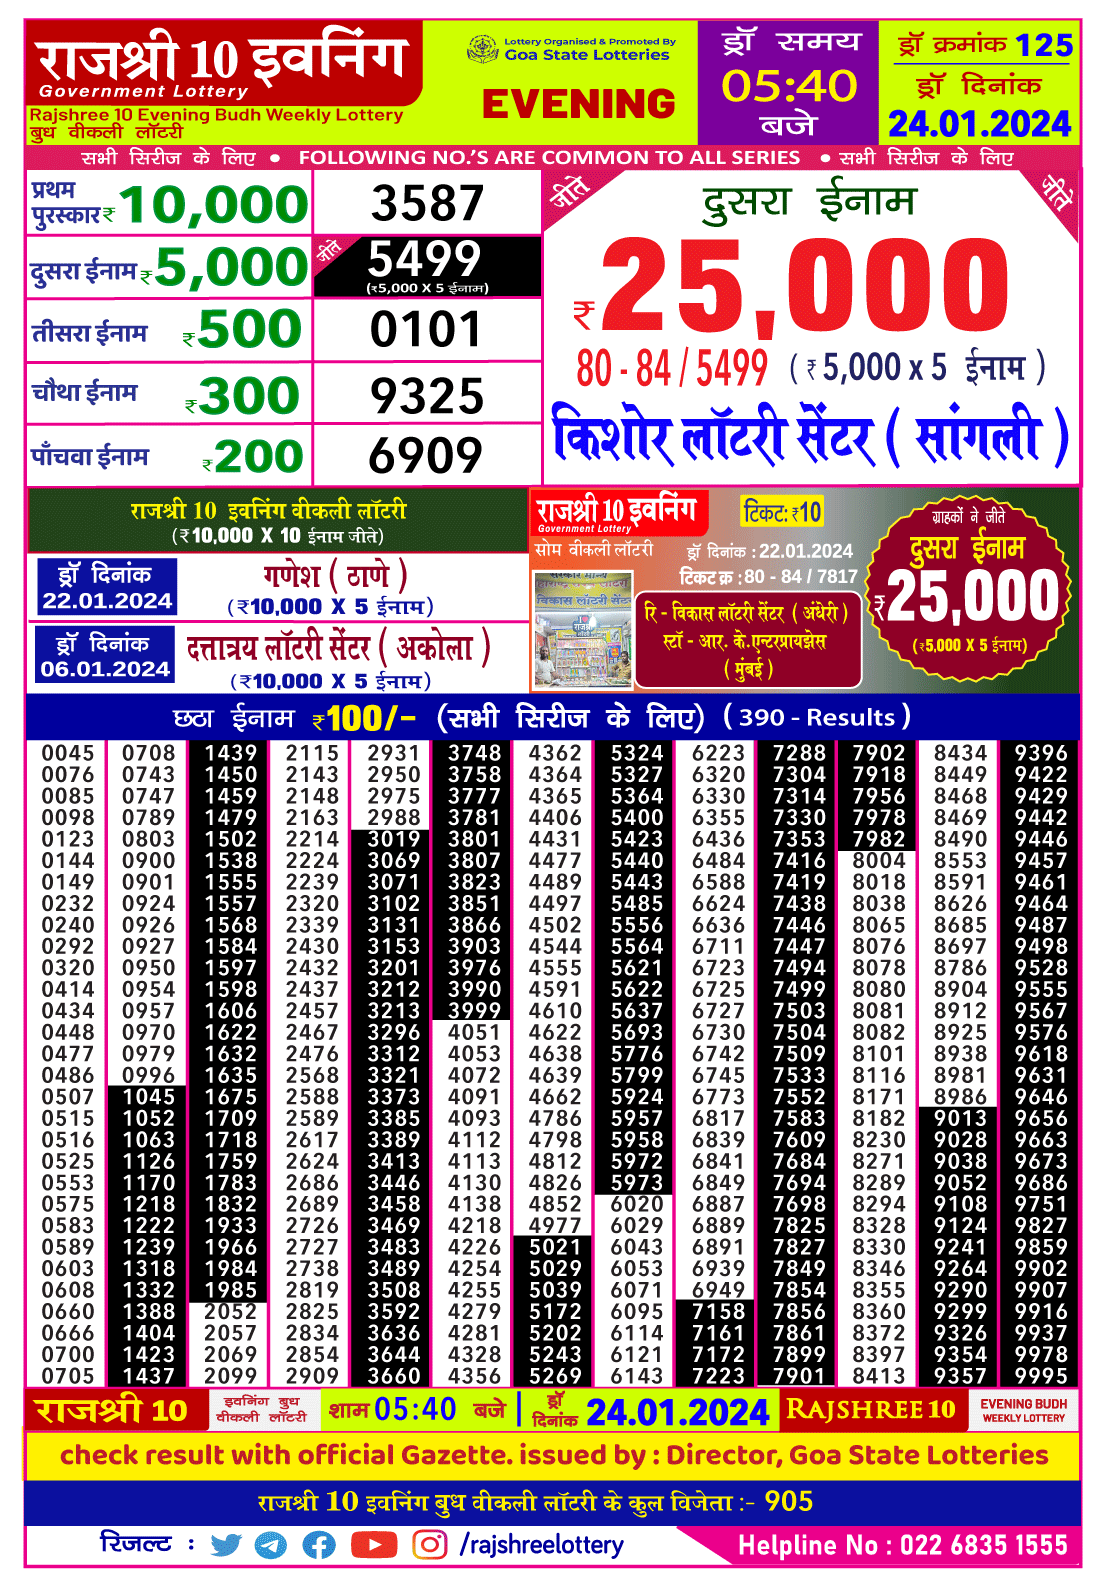 Rajshree 10 Evening Budh Weekly Lottery Result 24.01.2024